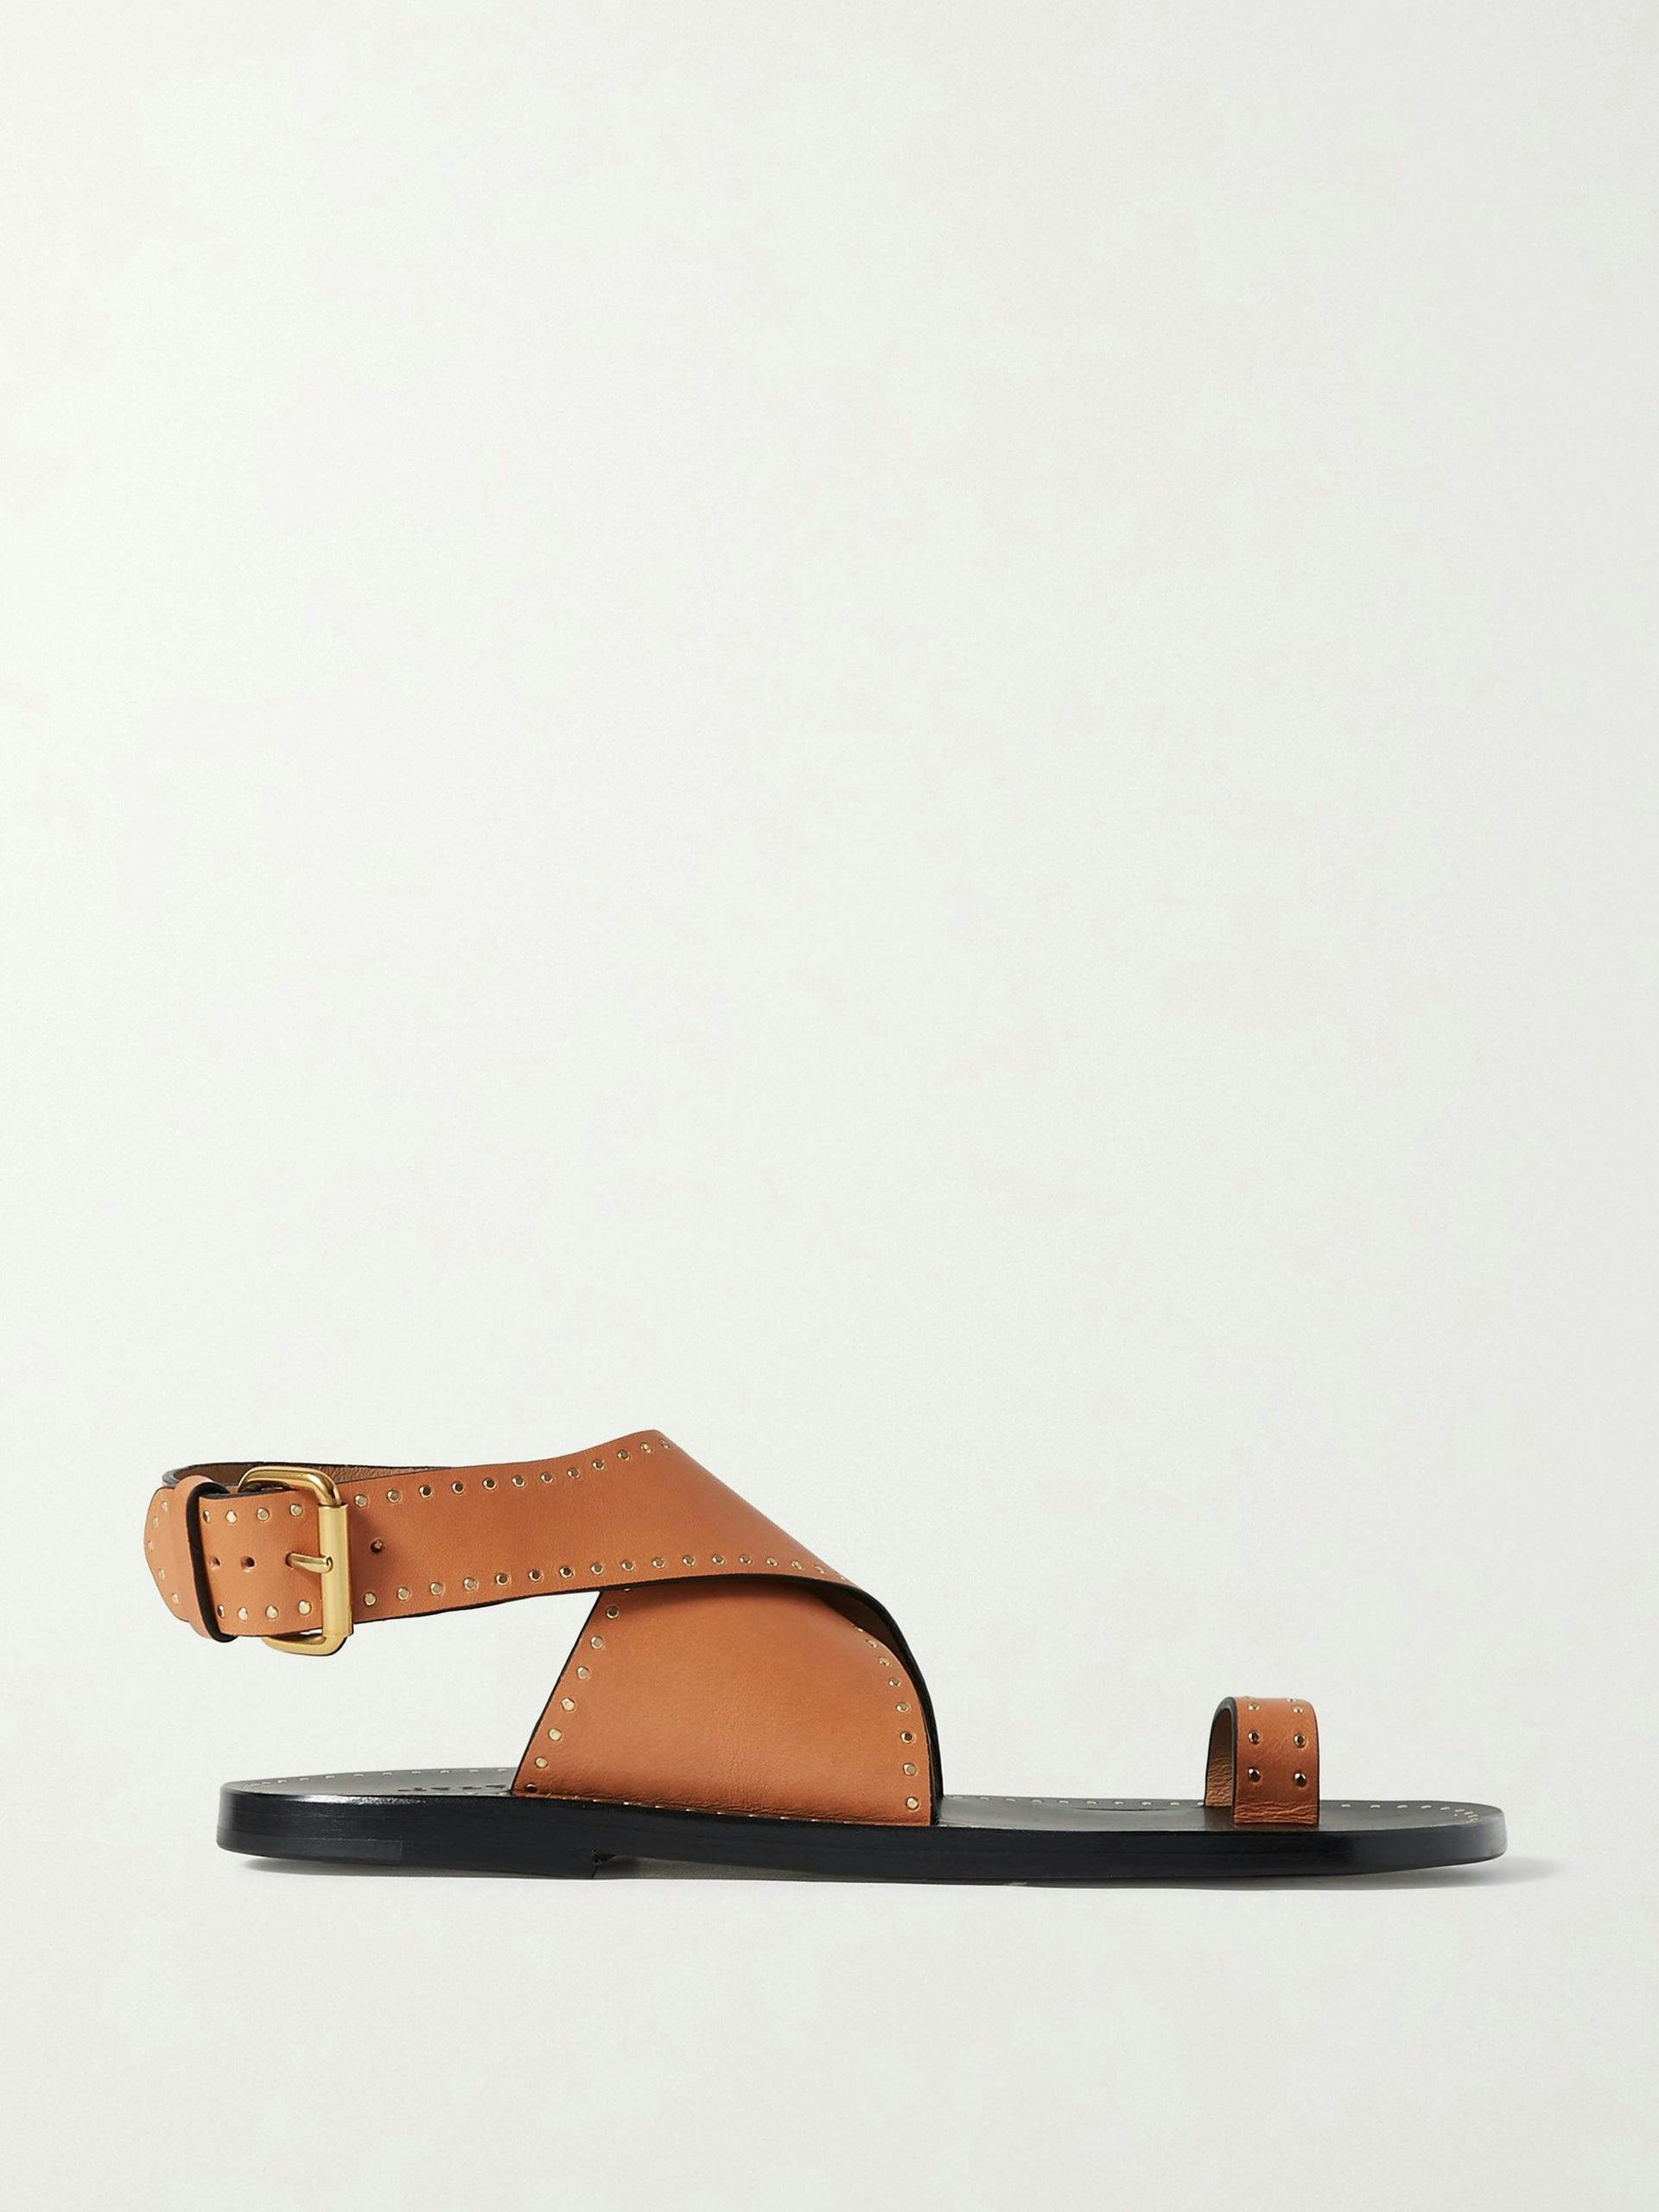 Jools studded tan leather sandals